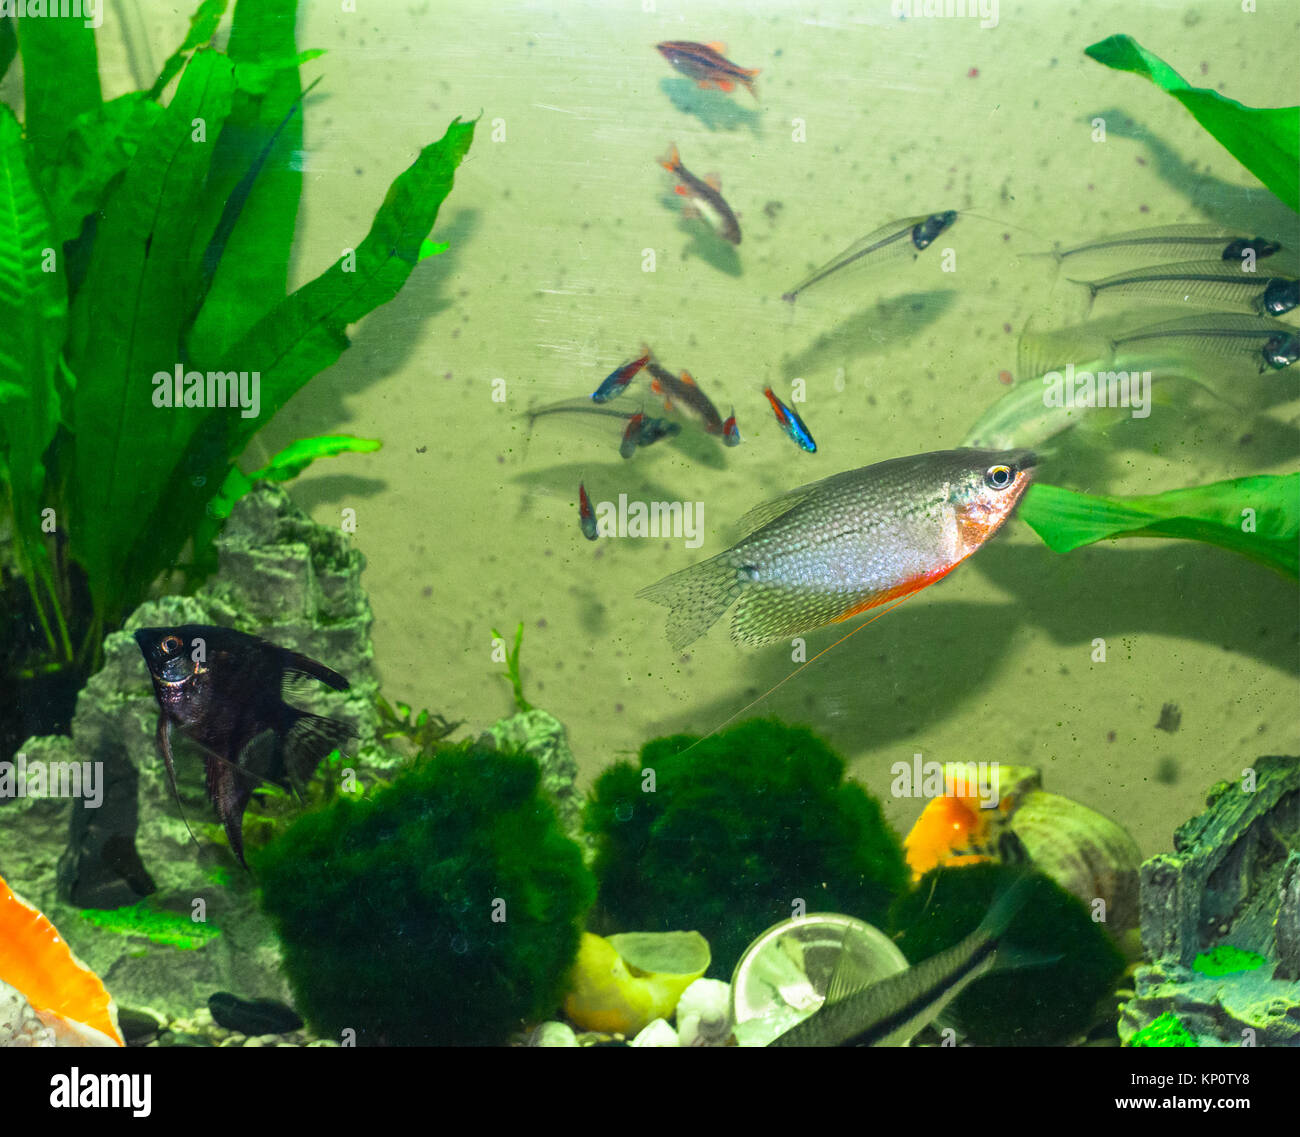 freshwater aquarium Stock Photo